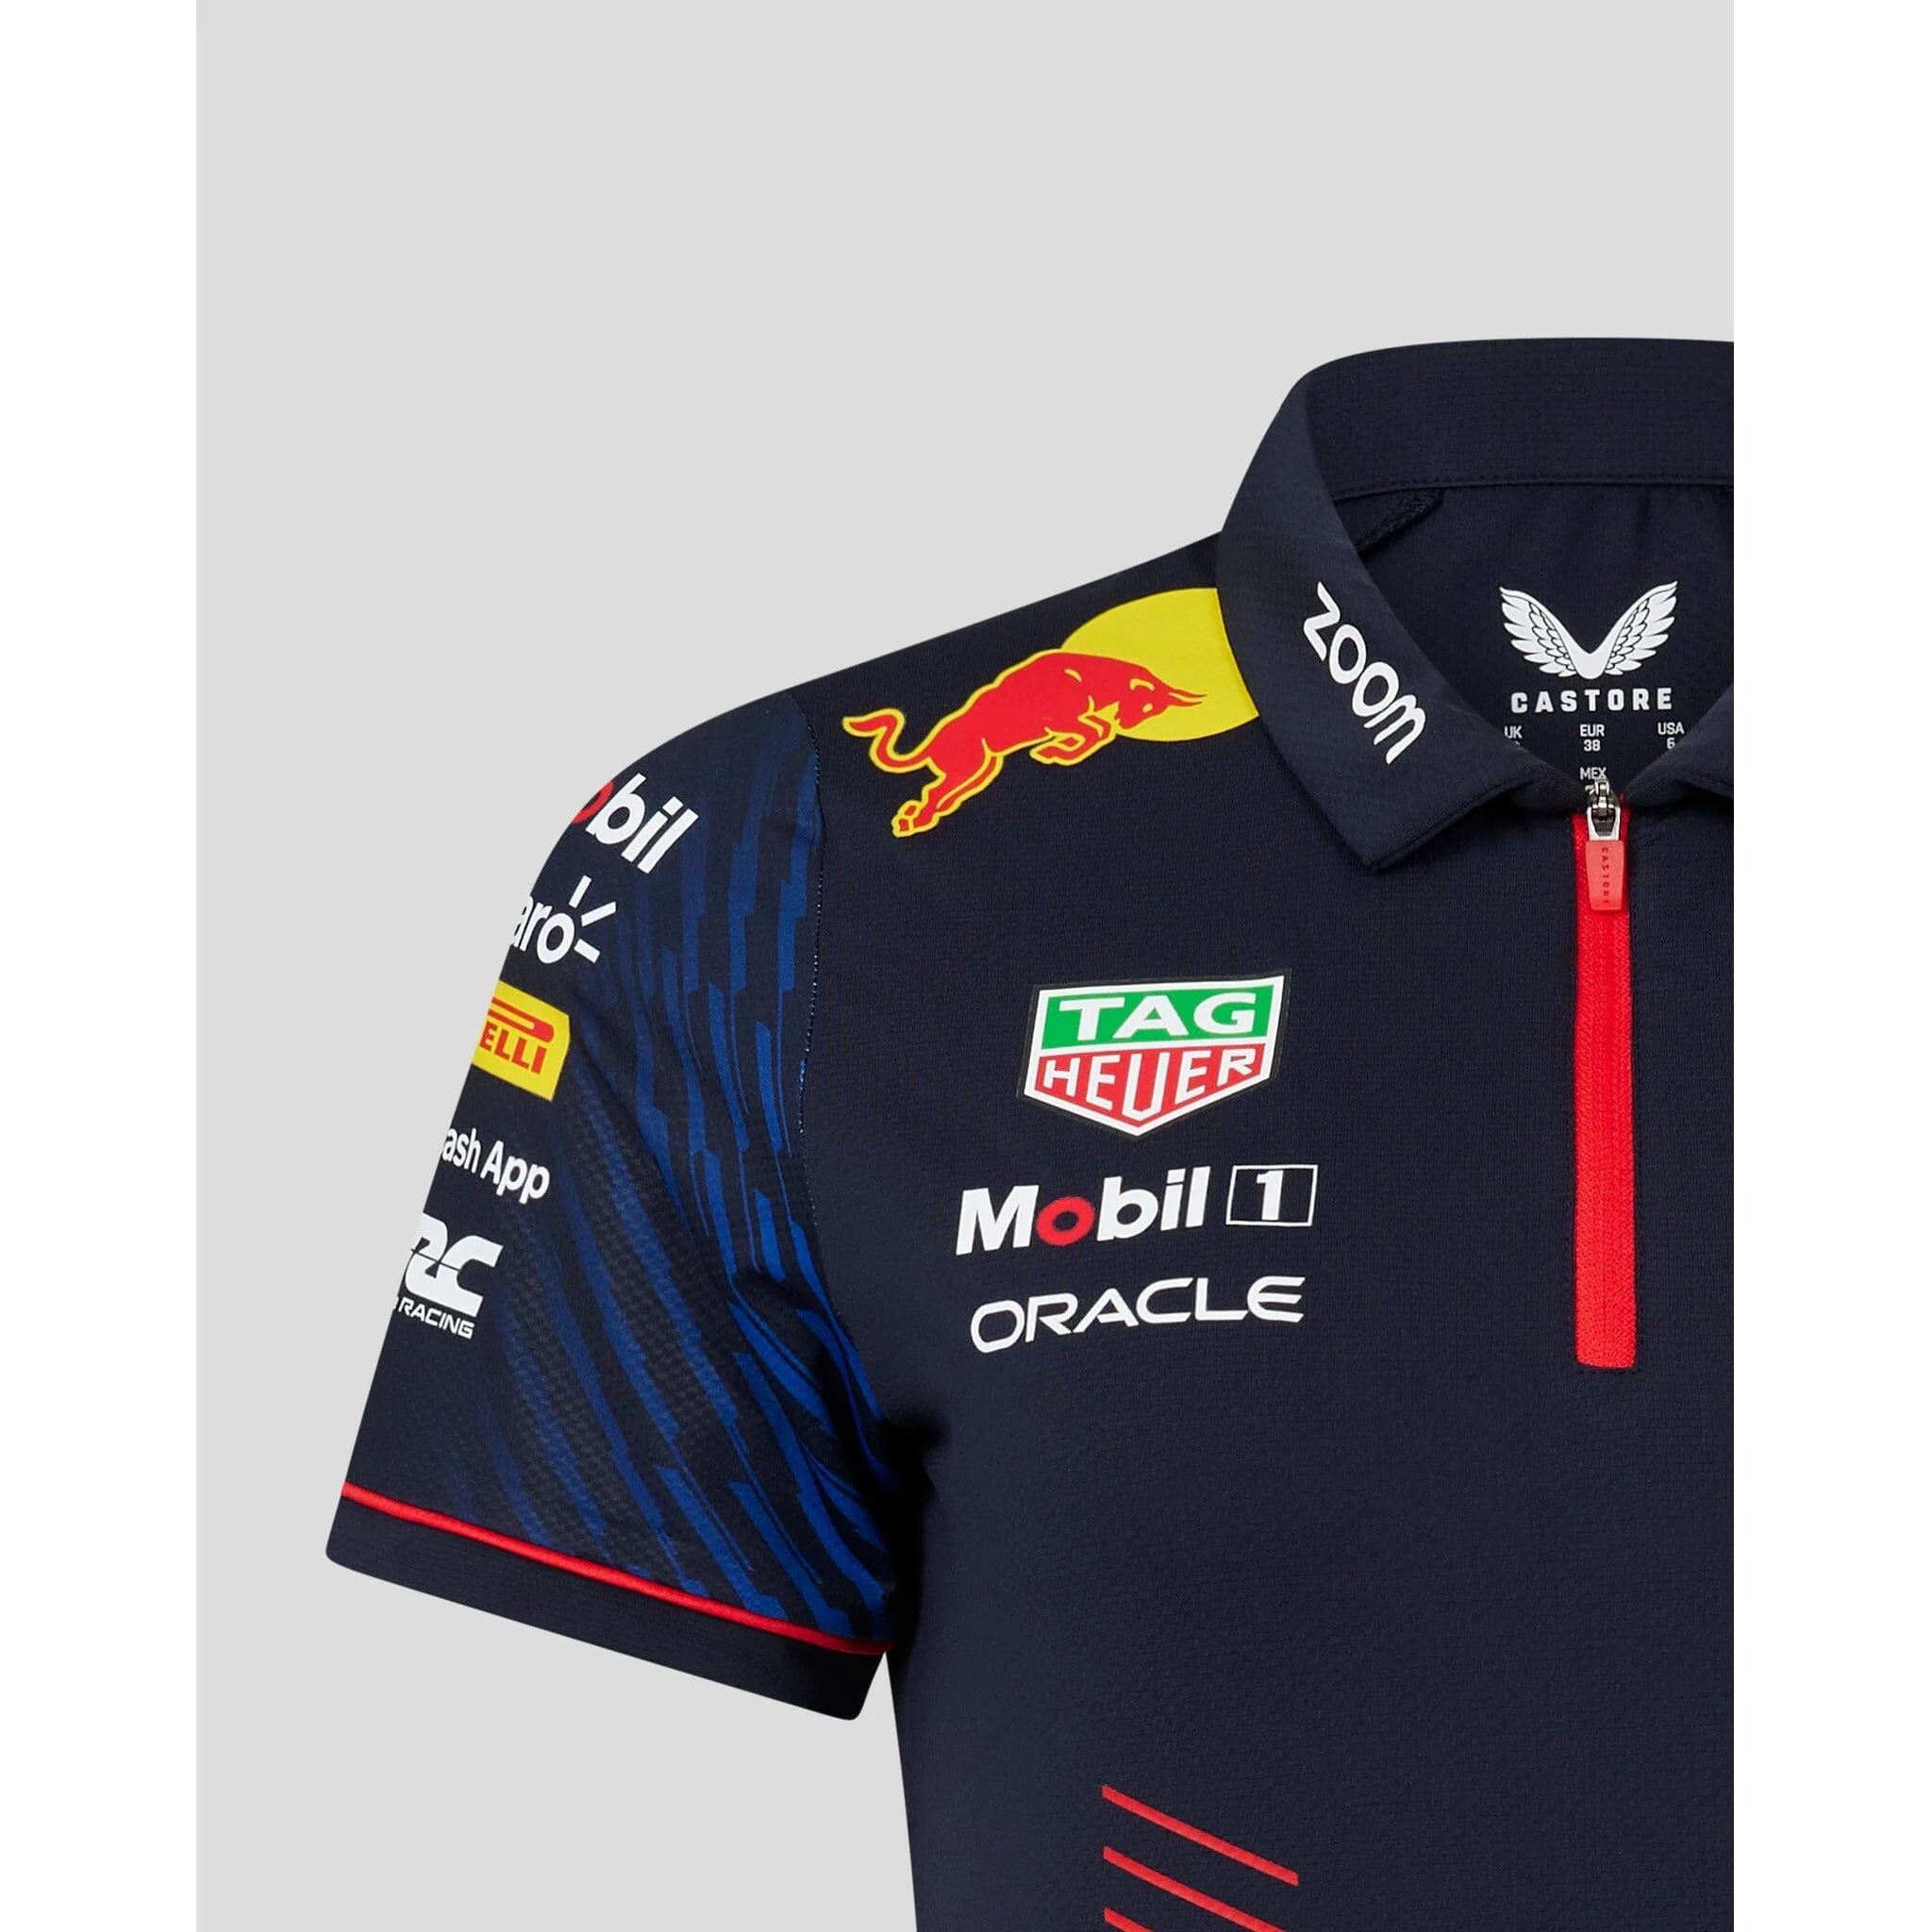 Red Bull Racing F1 Women's Team Polo Shirt Navy